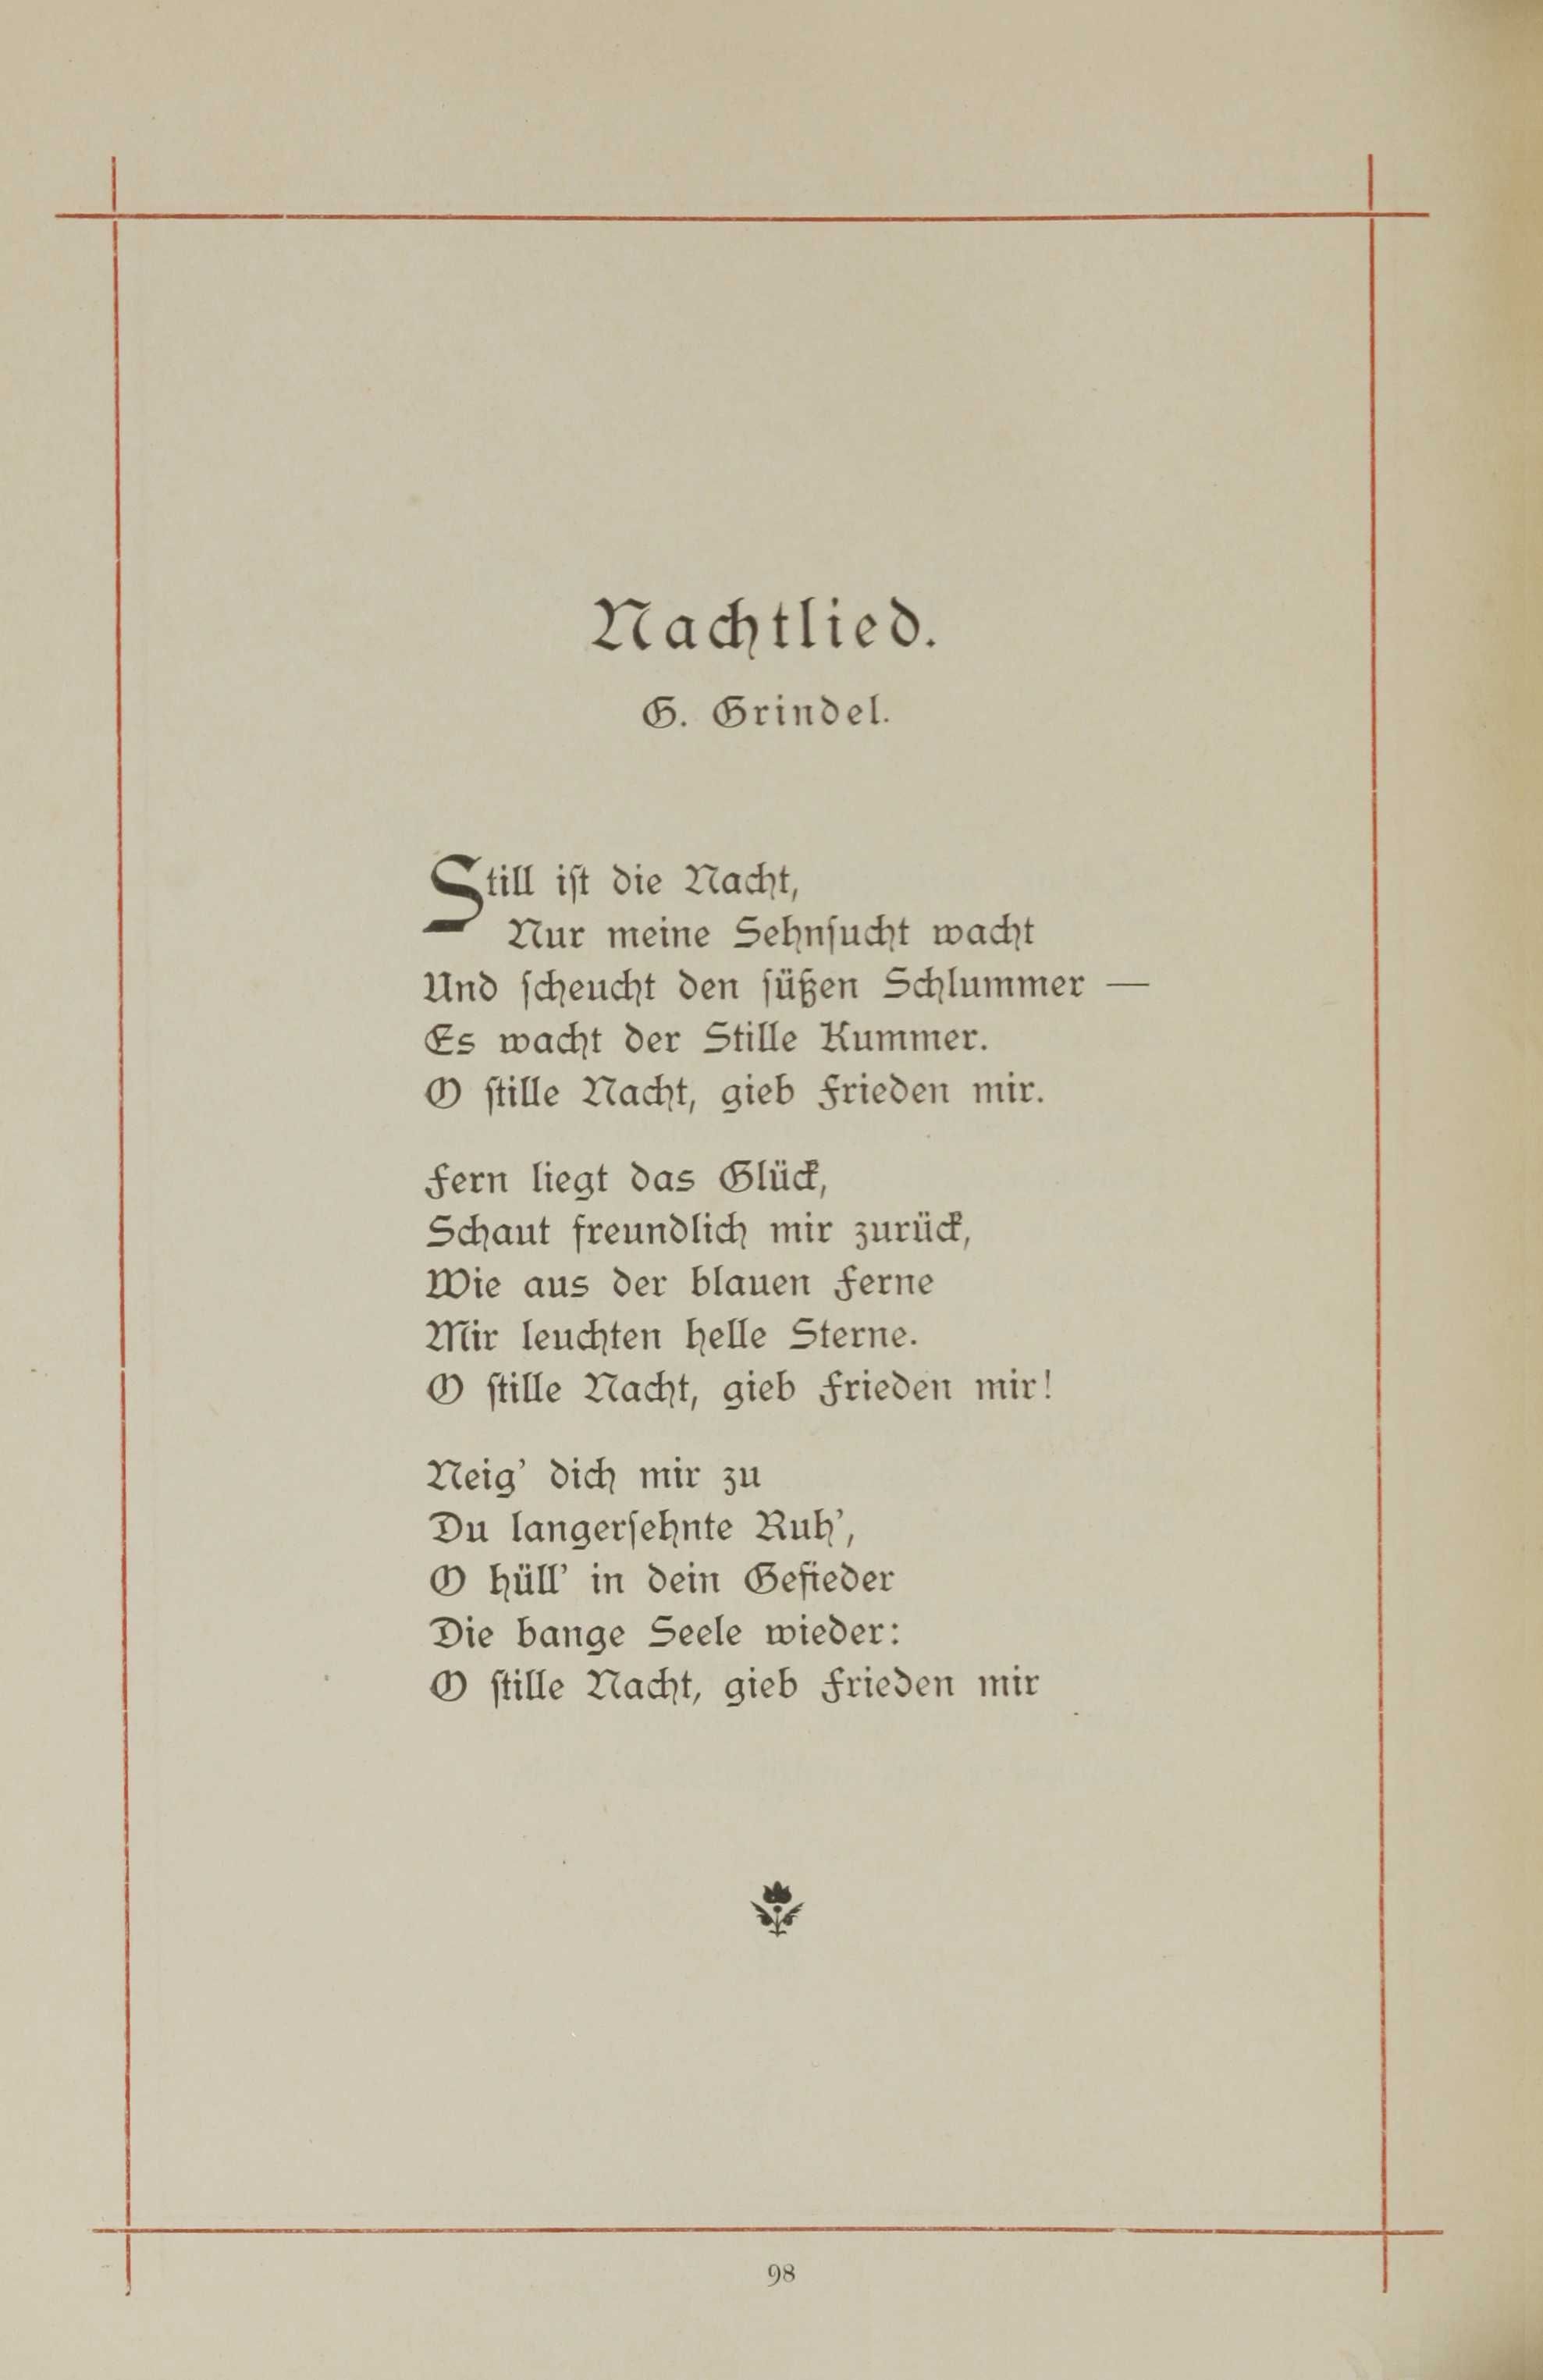 Erinnerung an die Fraternitas (1893) | 103. (98) Main body of text